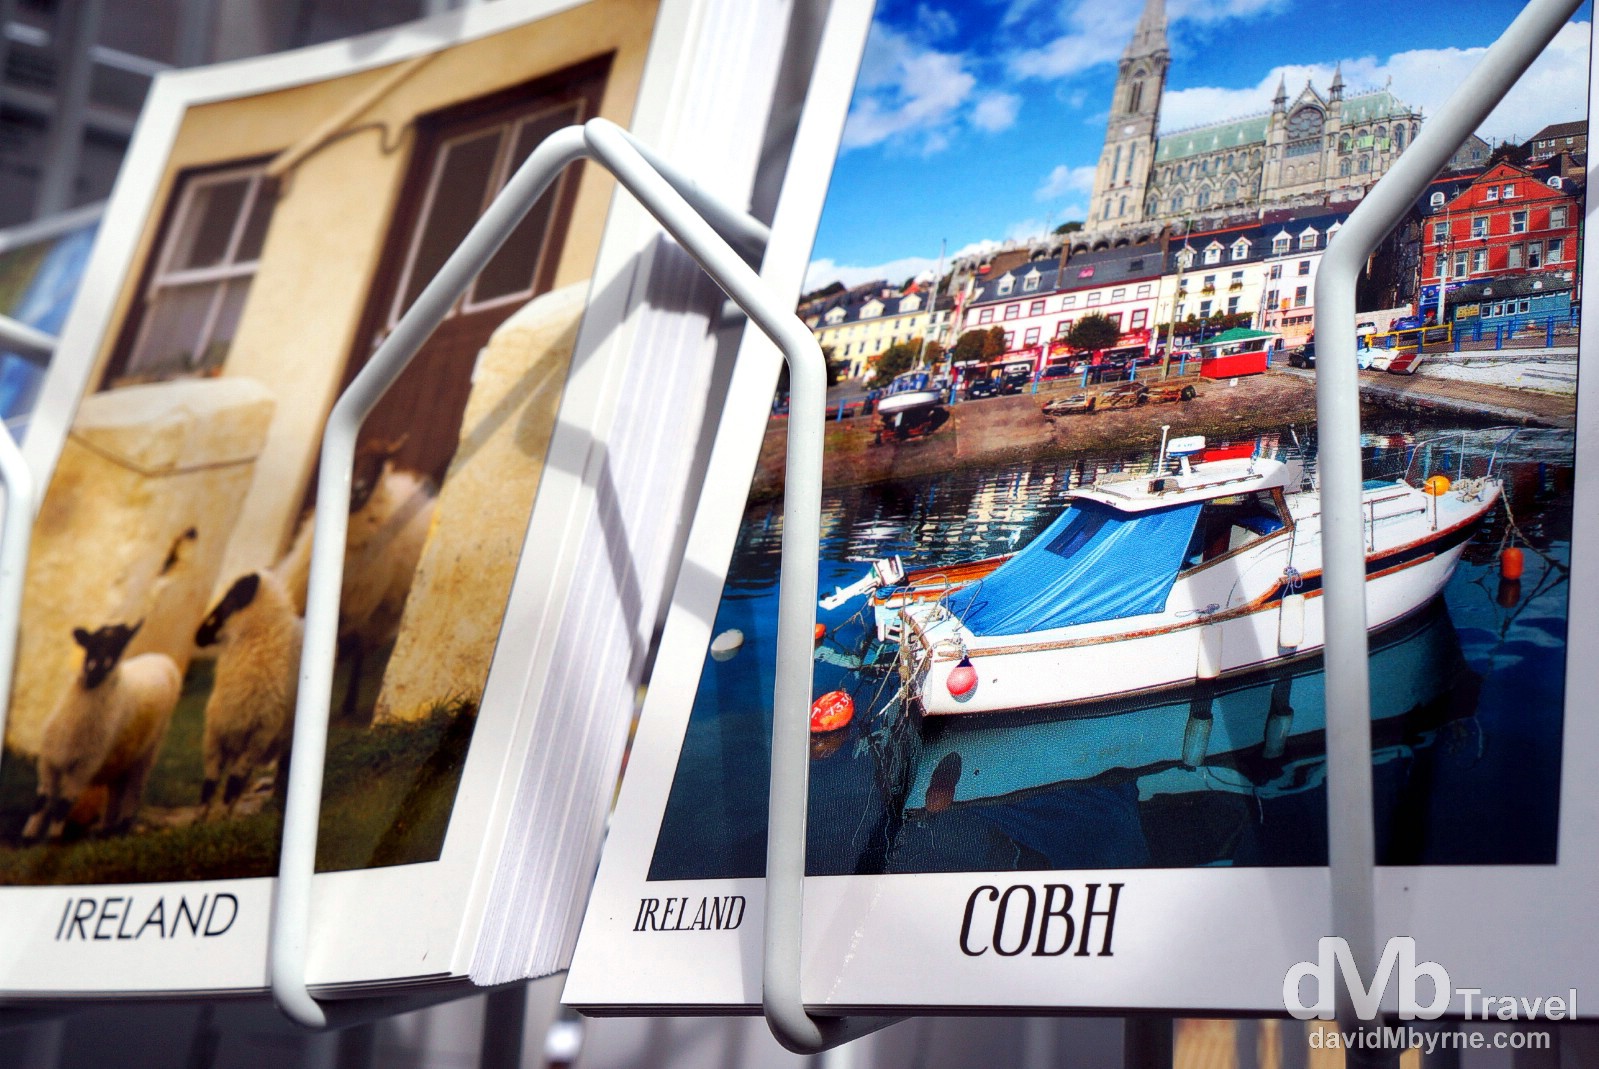 Postcards on sale in Cobh, Co. Cork, Ireland. August 29, 2014.